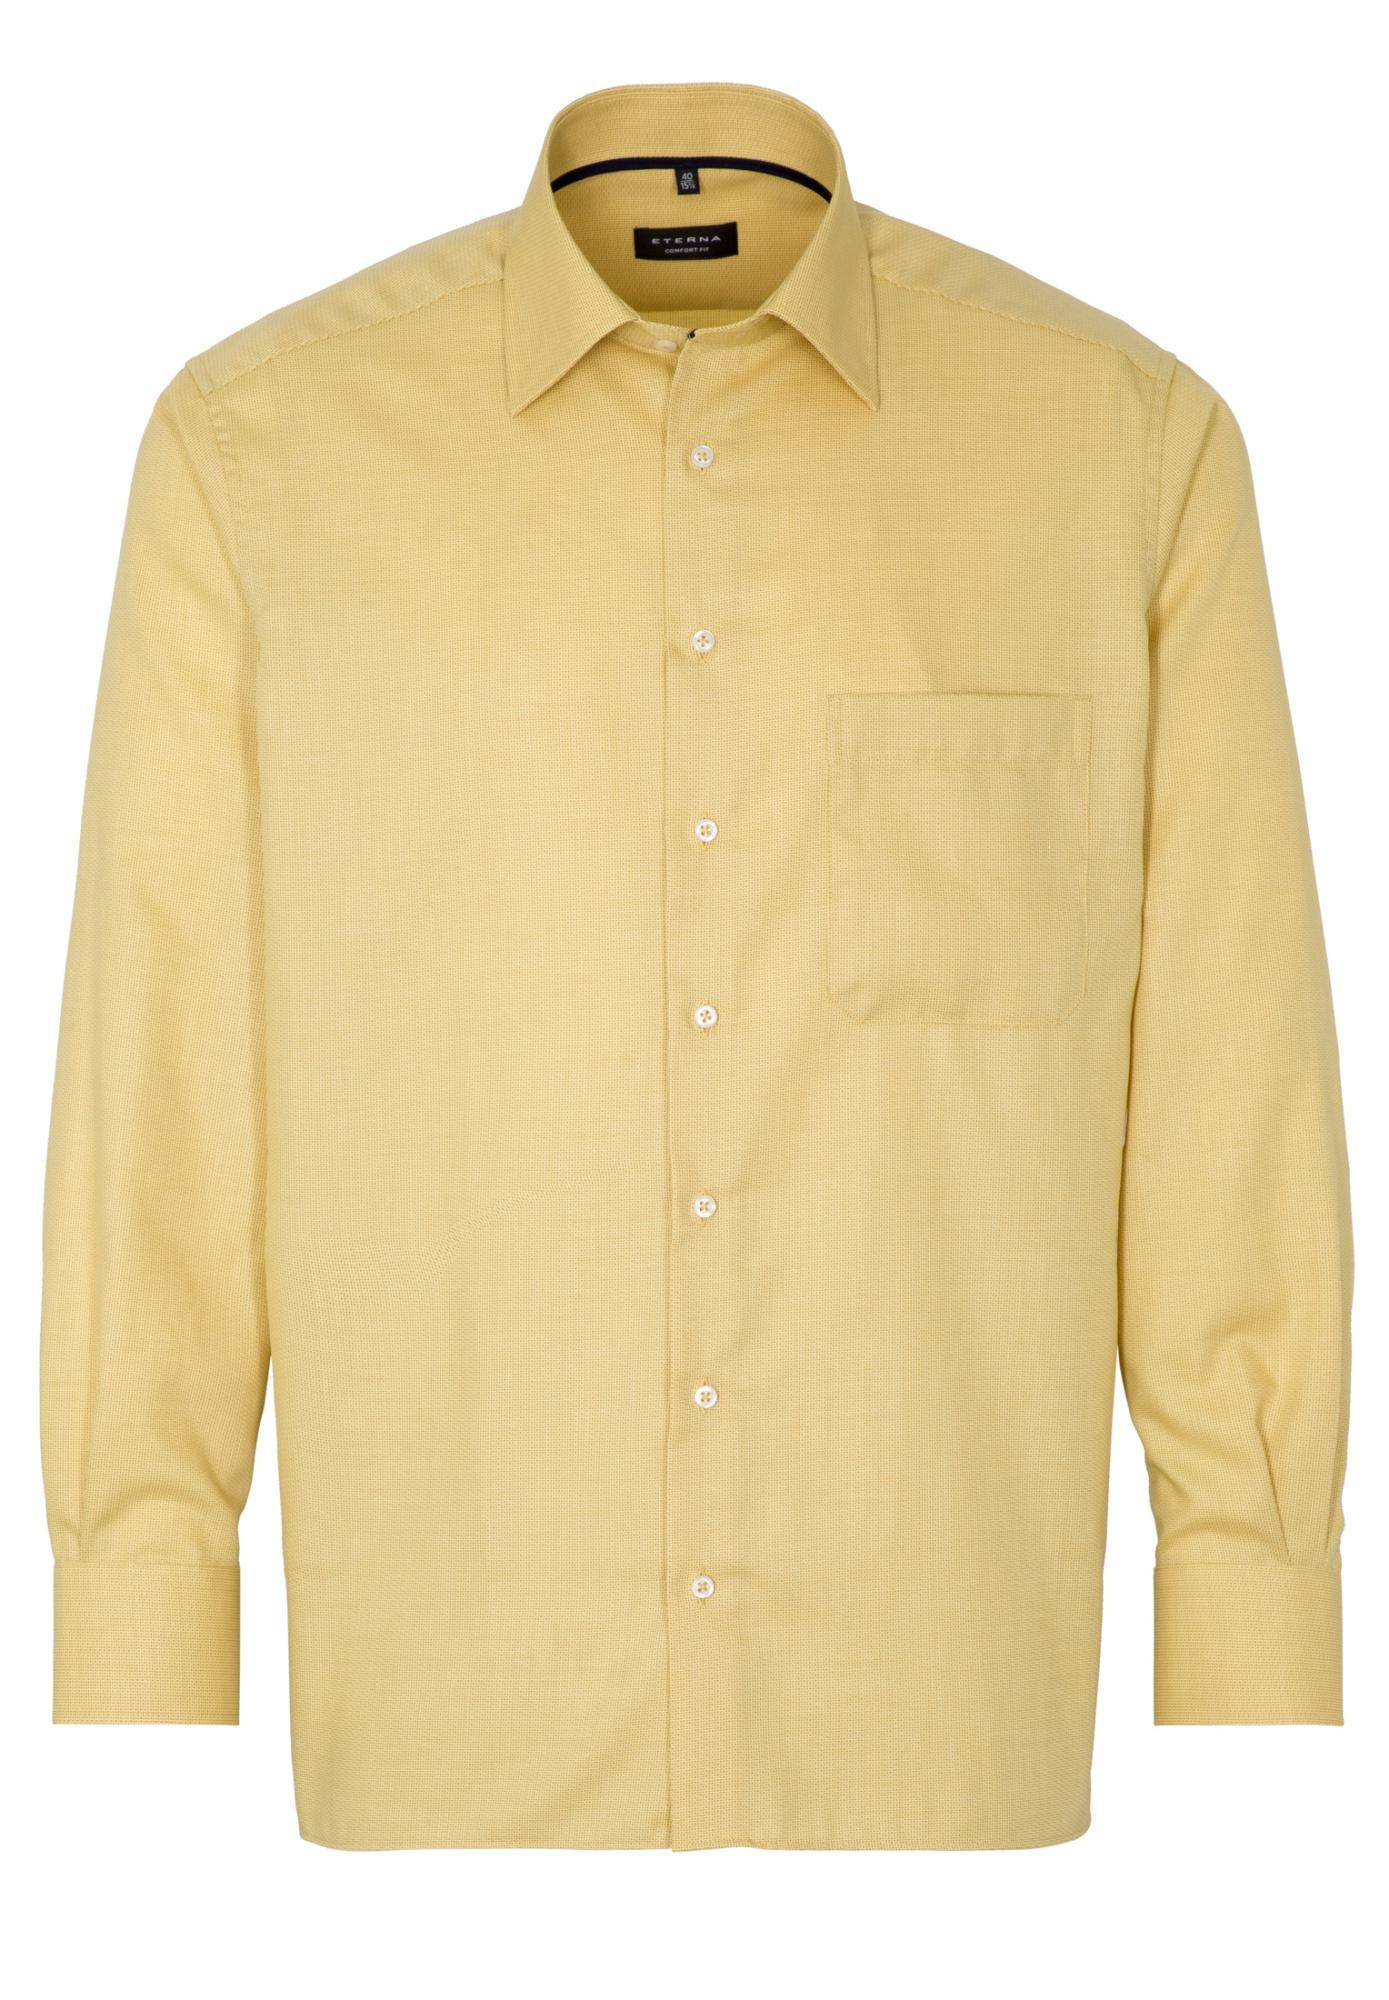 Мужская рубашка ETERNA, желтая, цвет желтый, размер 54 - фото 1